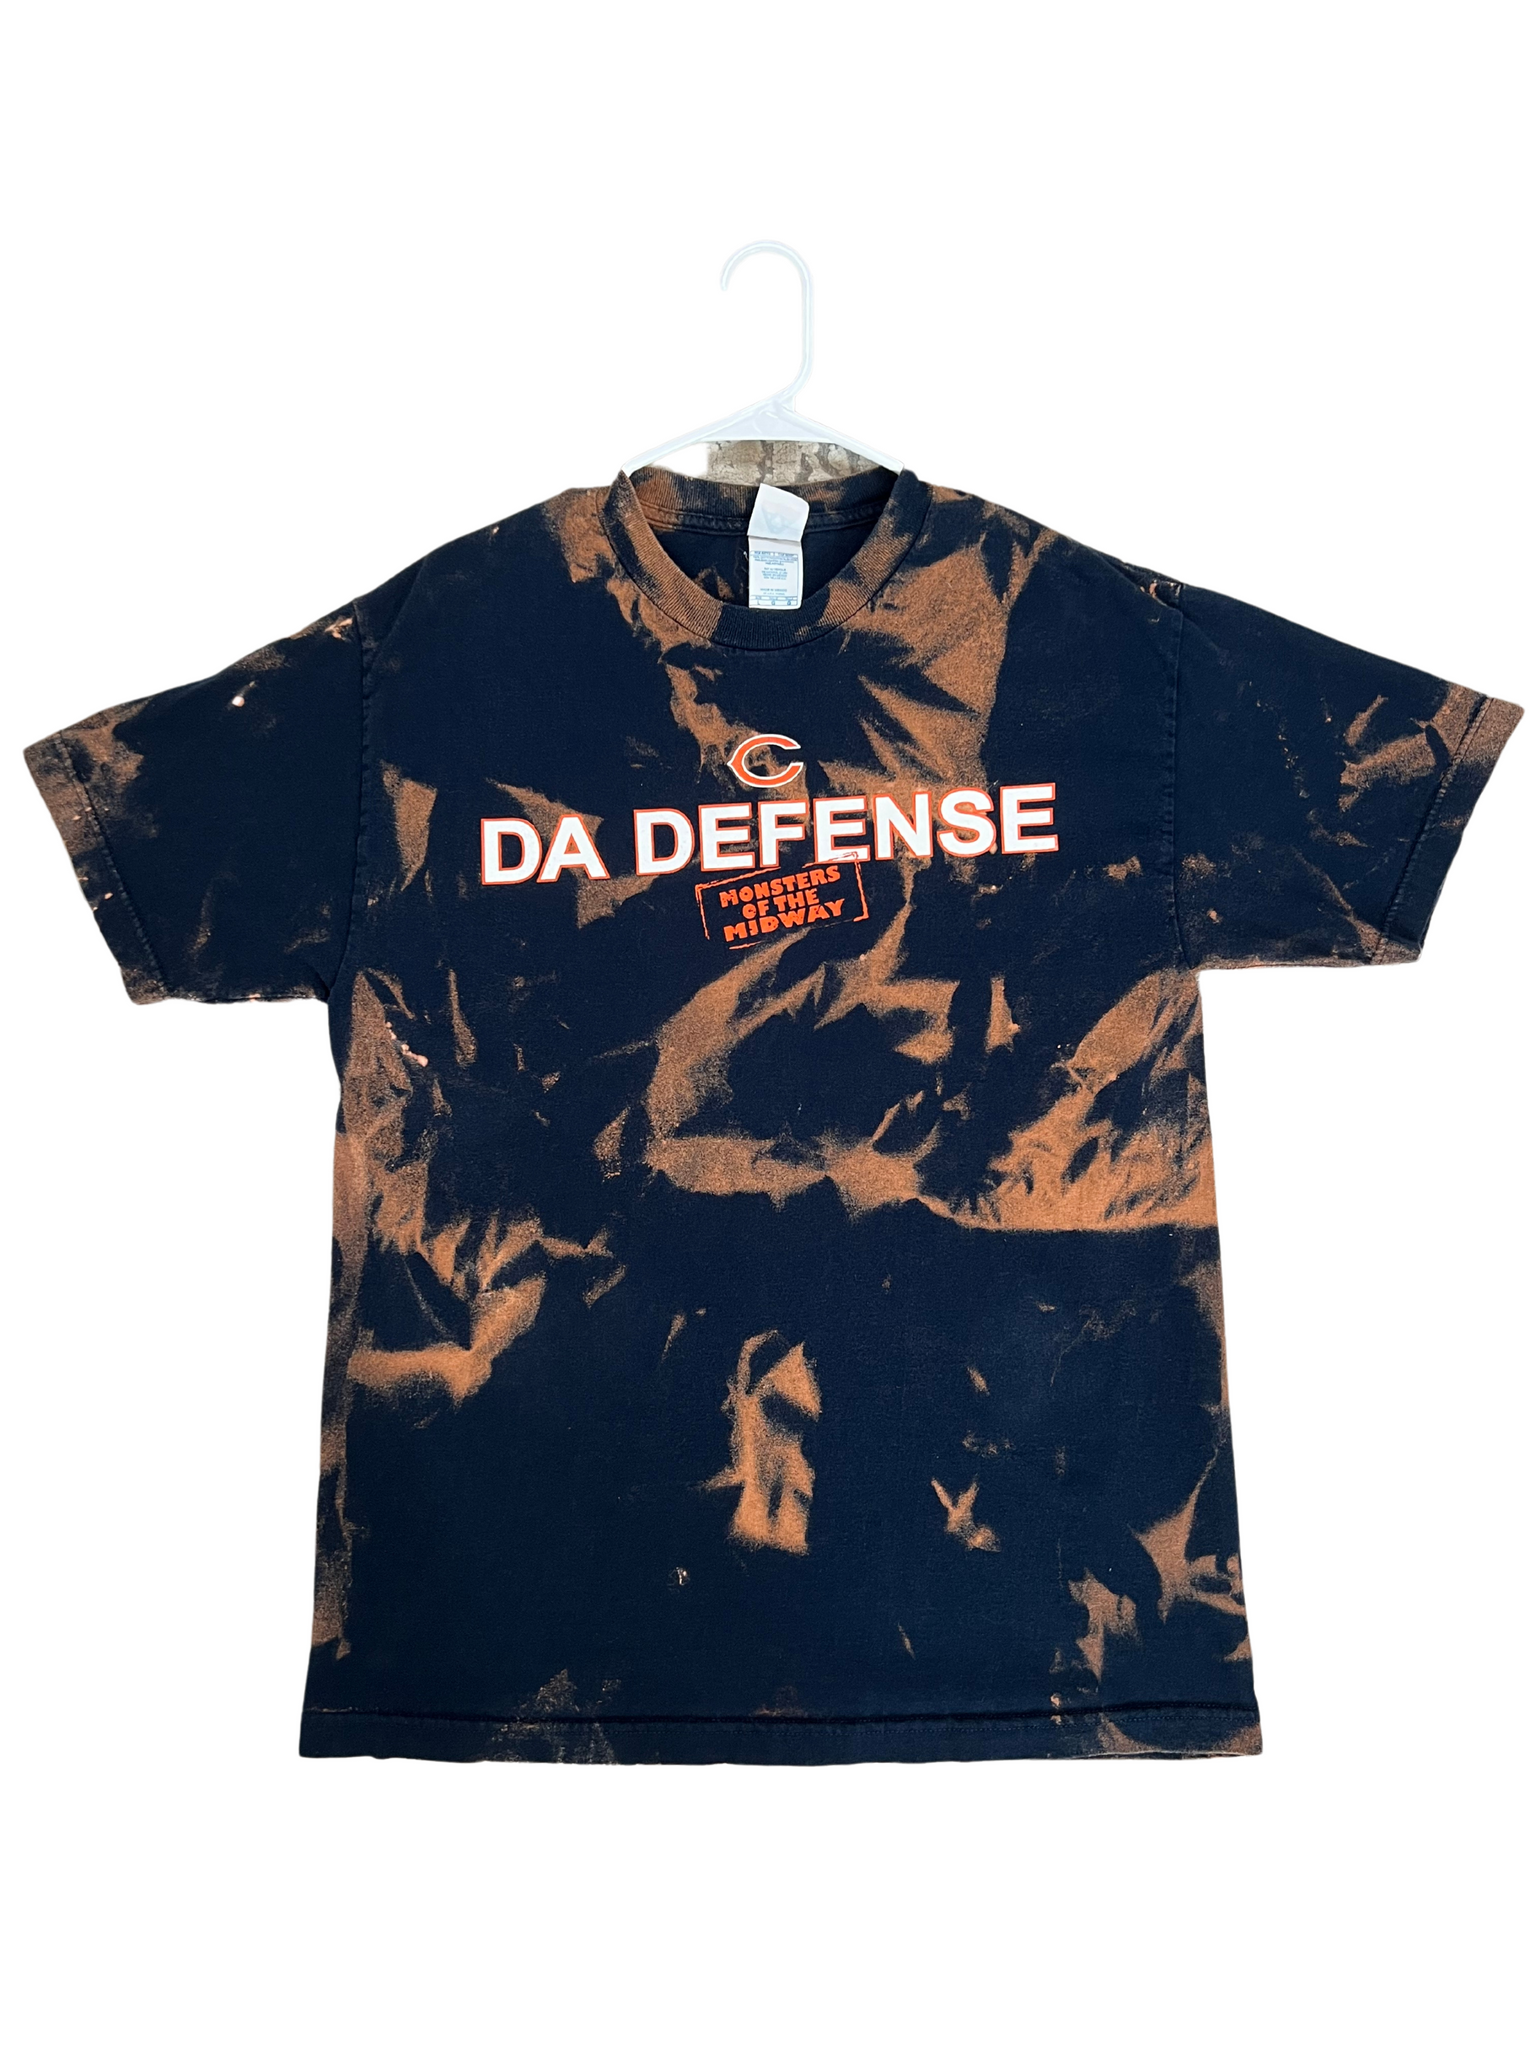 Chicago Bears “Da Defense” Bleached Shirt